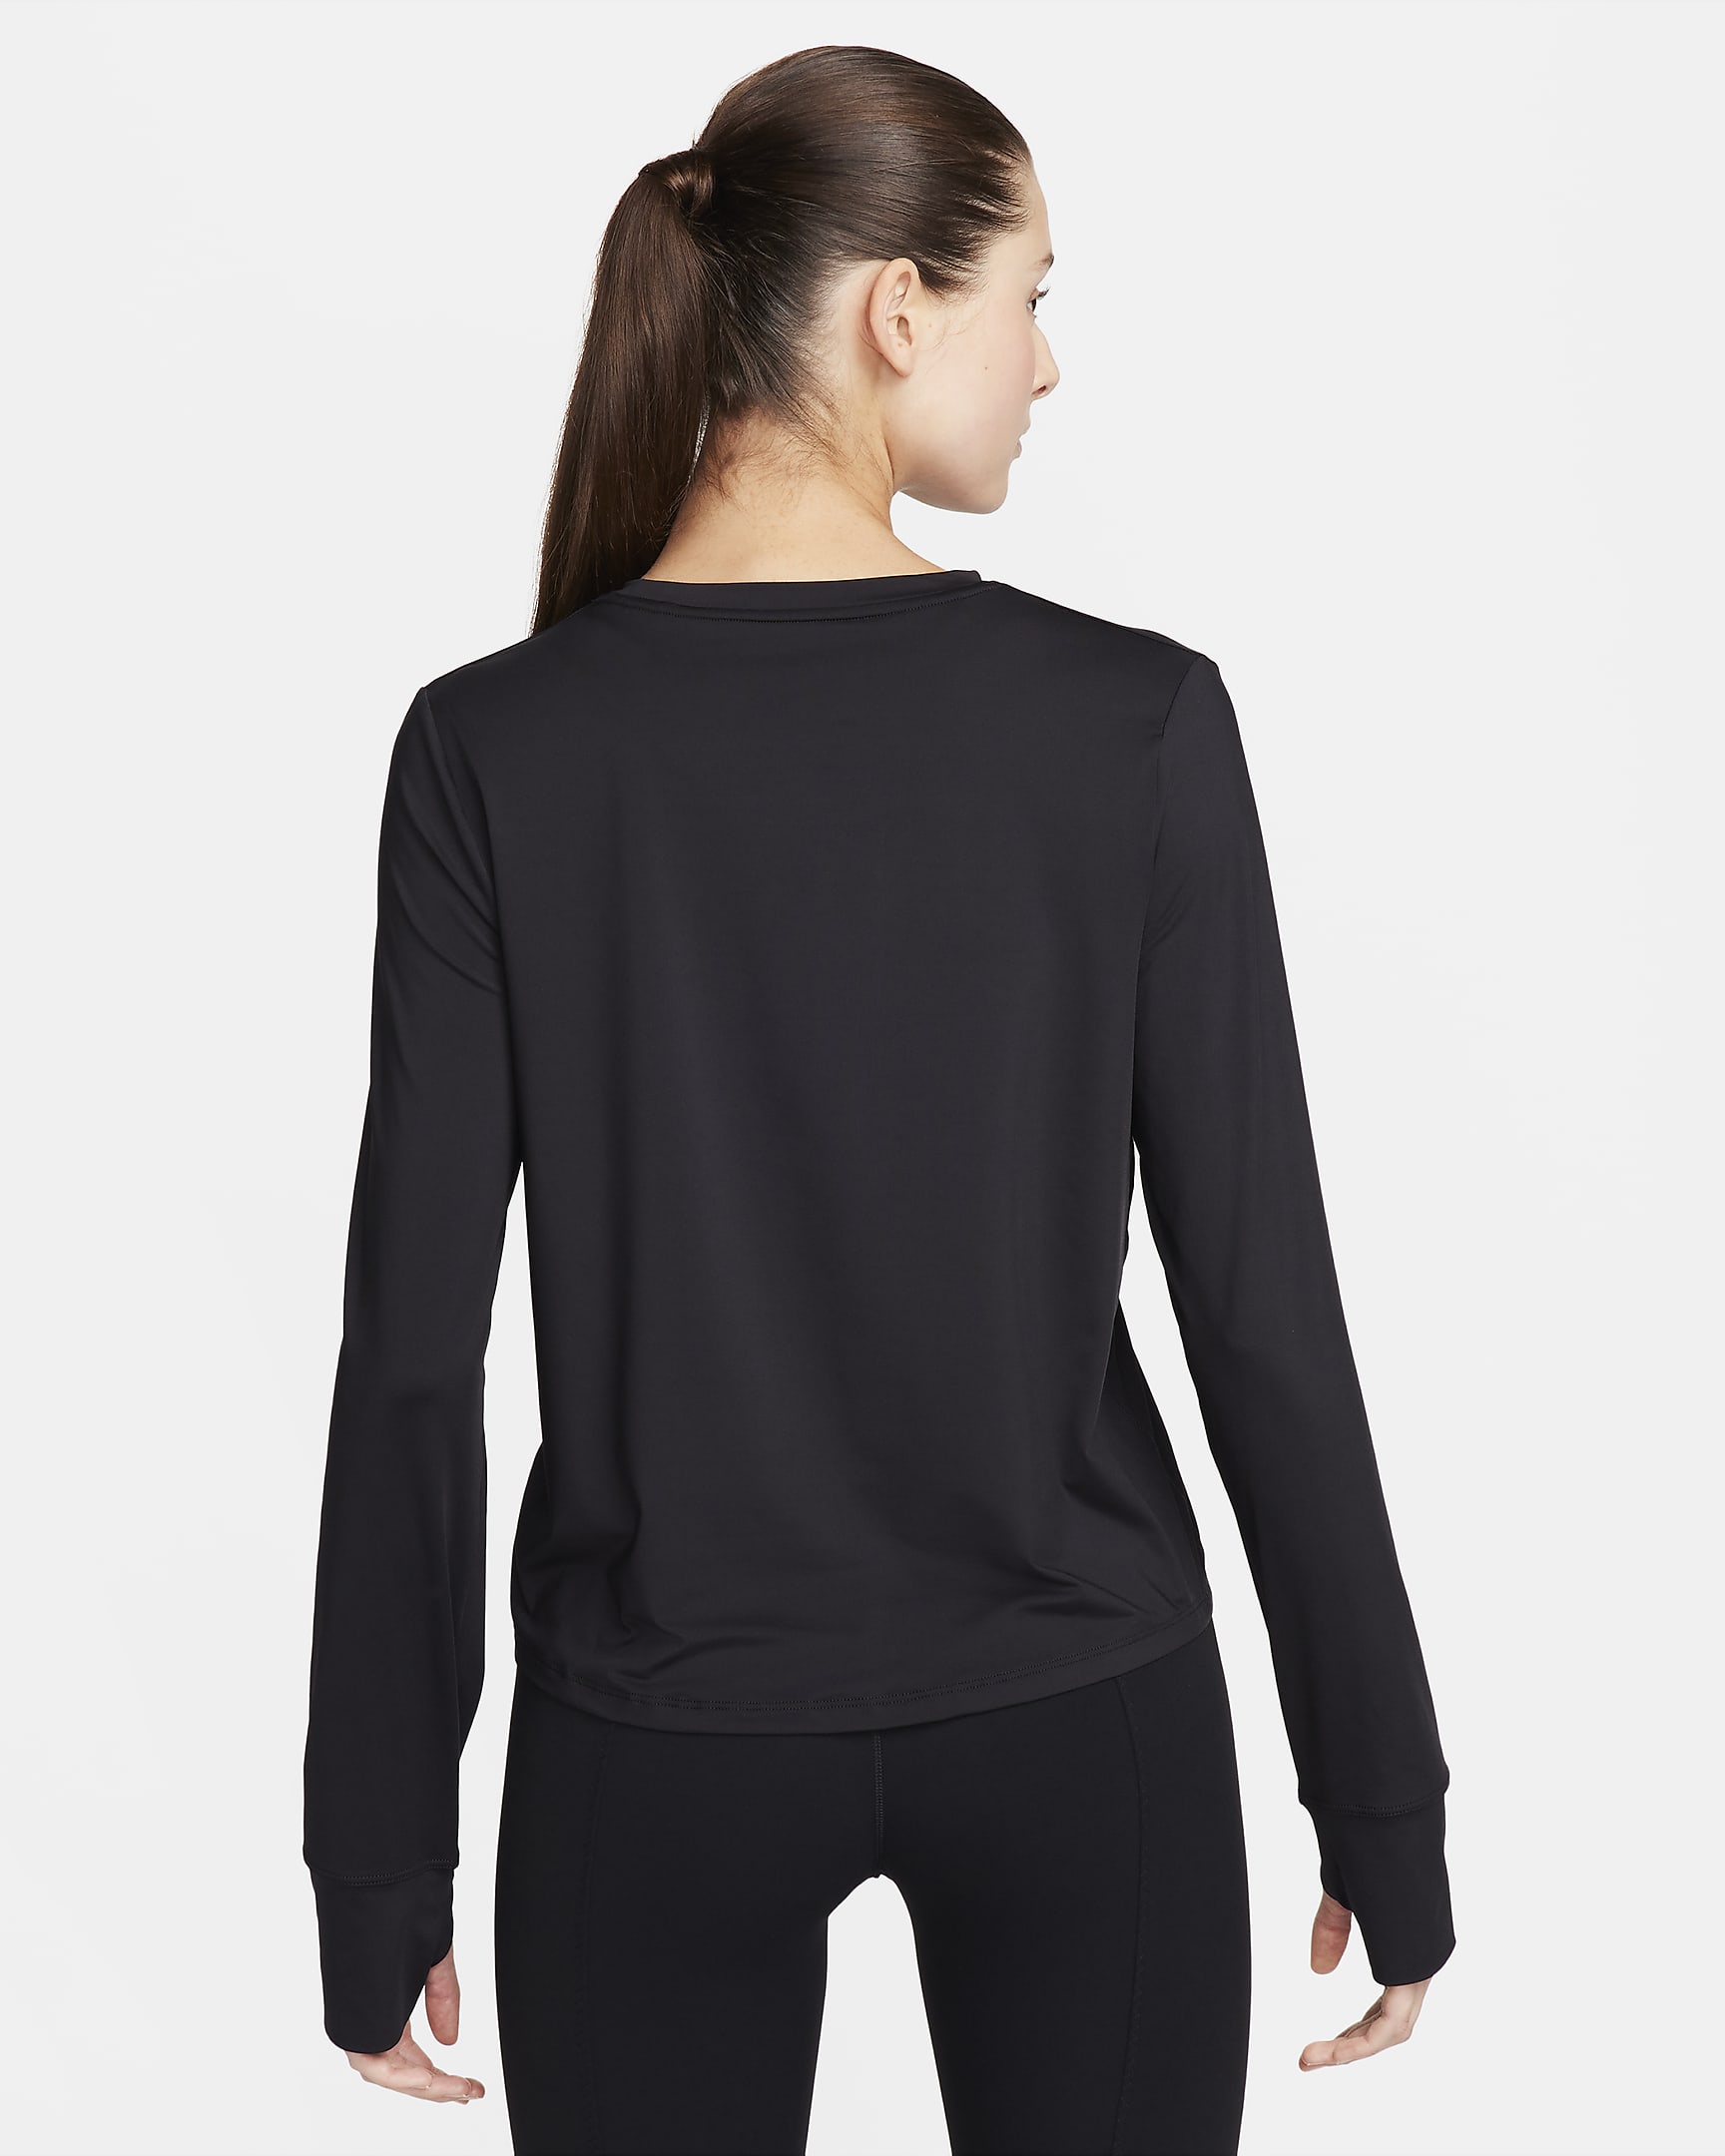 Nike One Classic Women's Dri-FIT Long-Sleeve Top - Black/Black